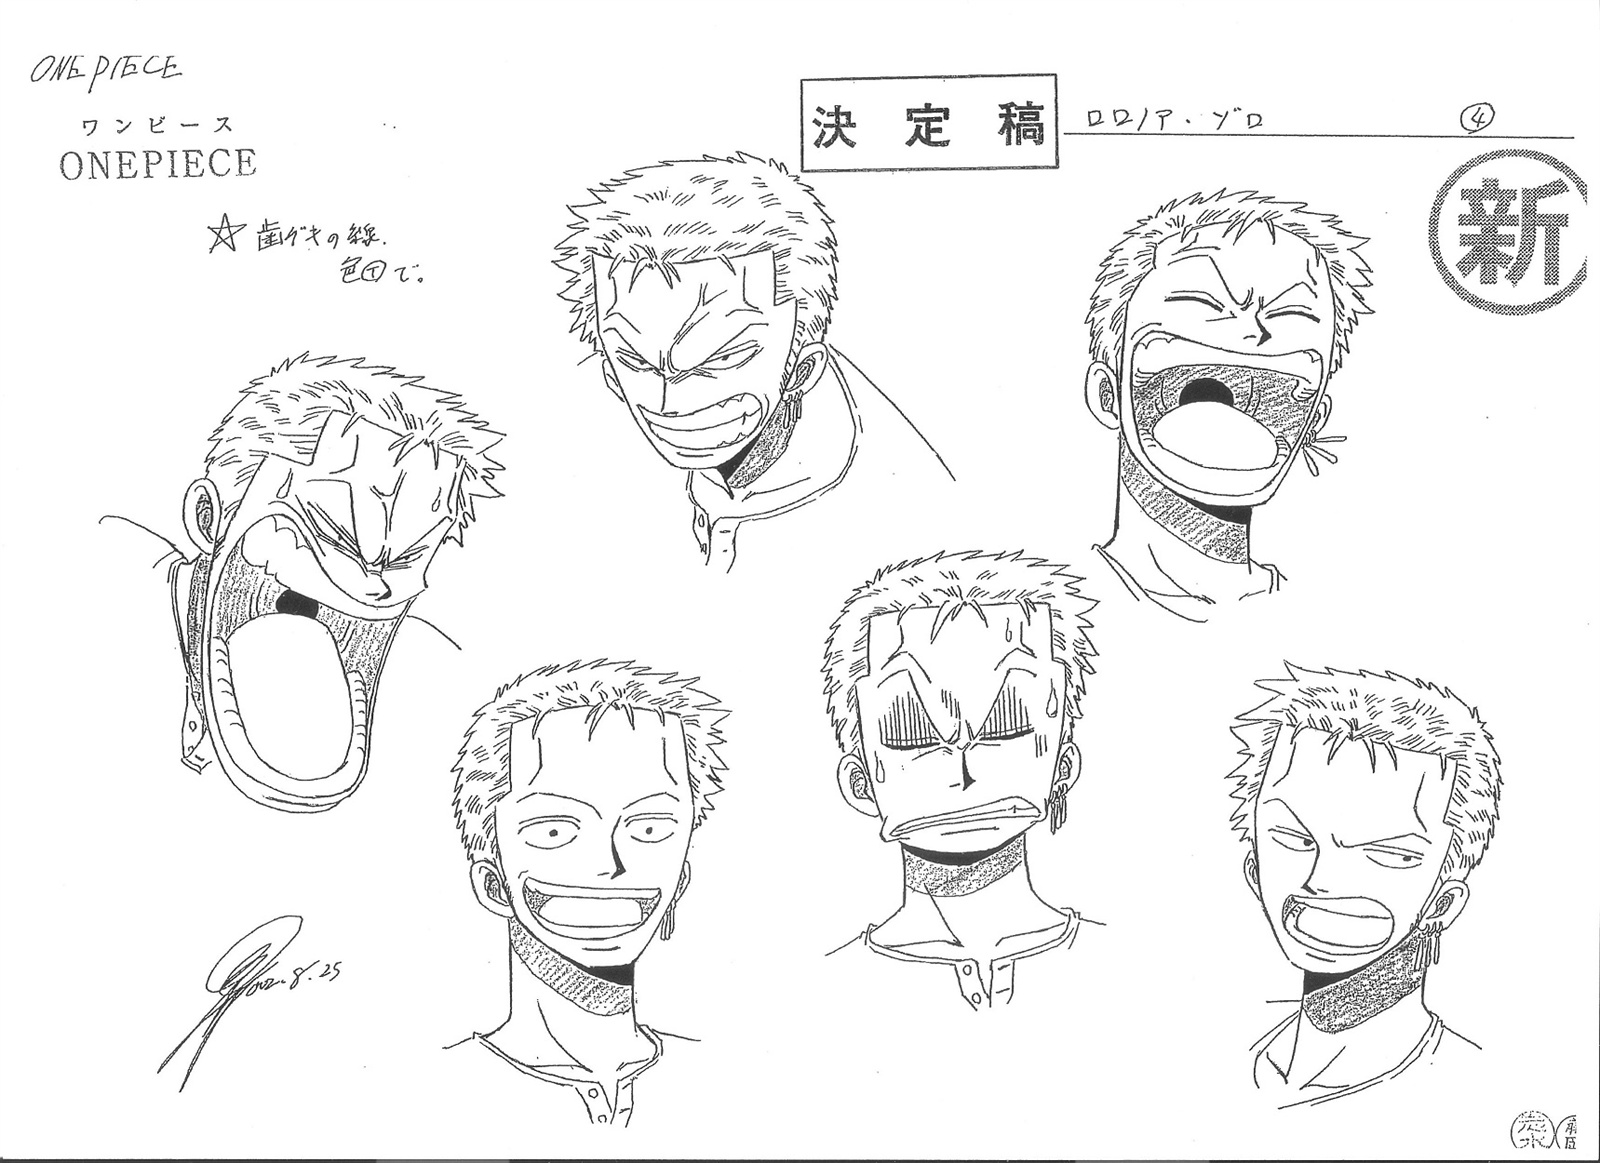 One Piece gallery - One Piece model sheet 02 (Roronoa Zoro)